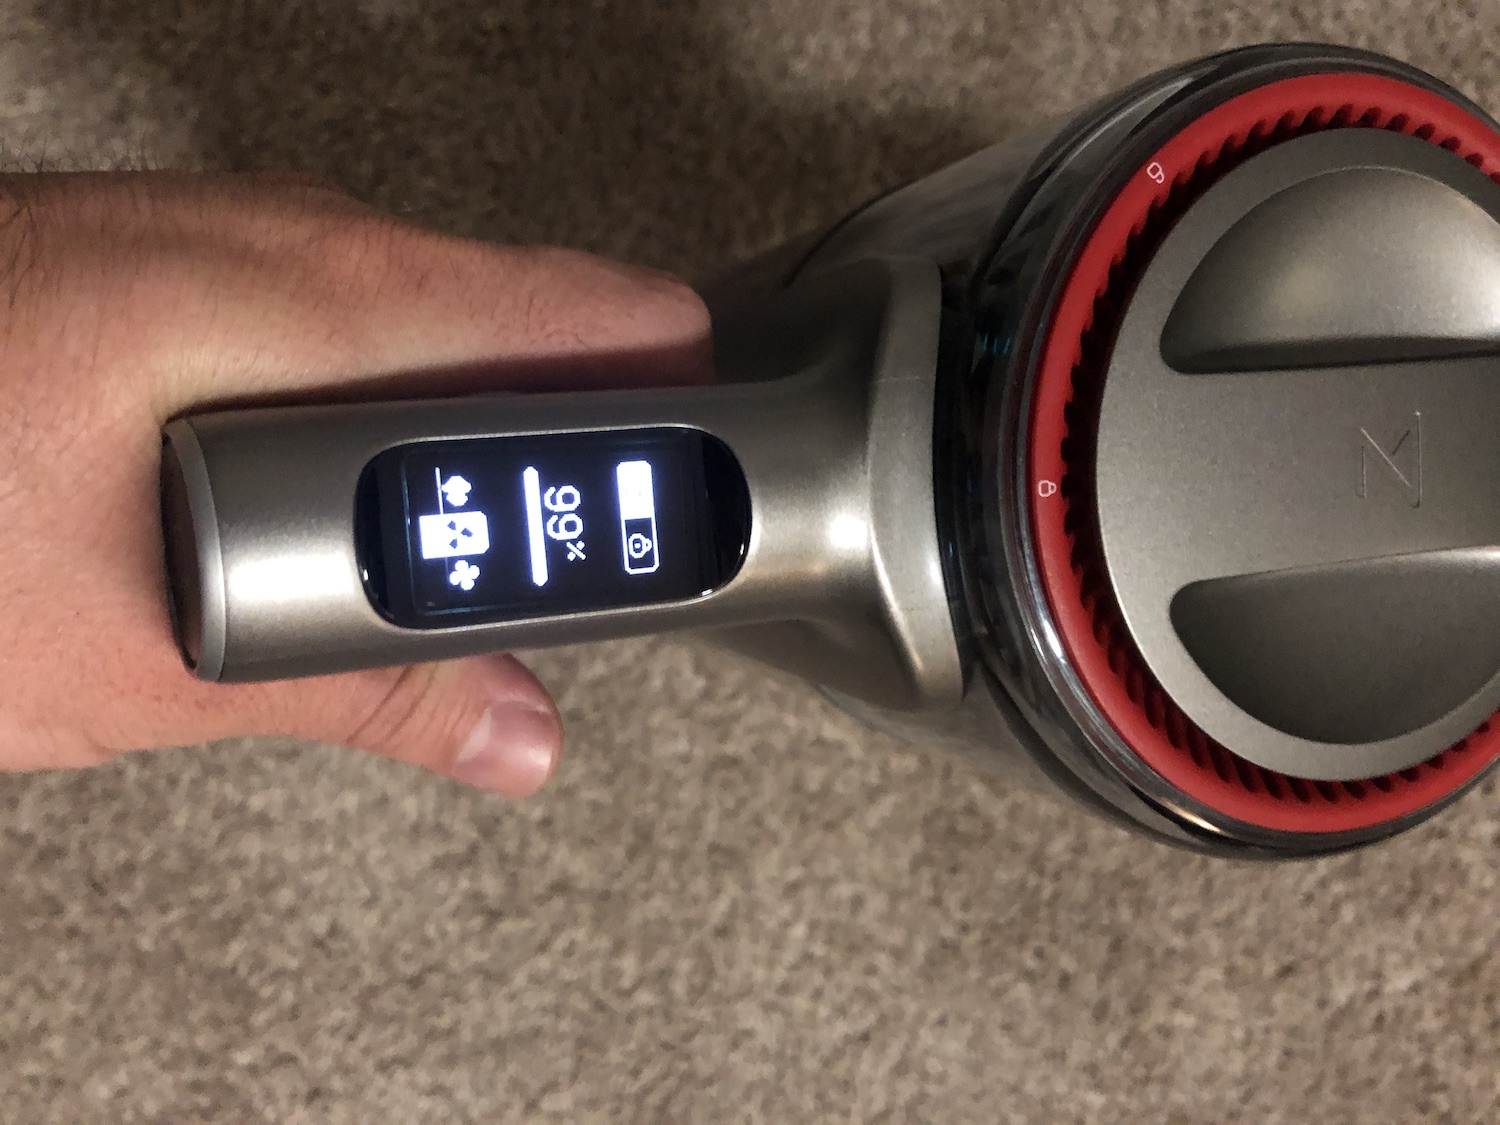 Roborock H7 cordless vacuum review - The Gadgeteer